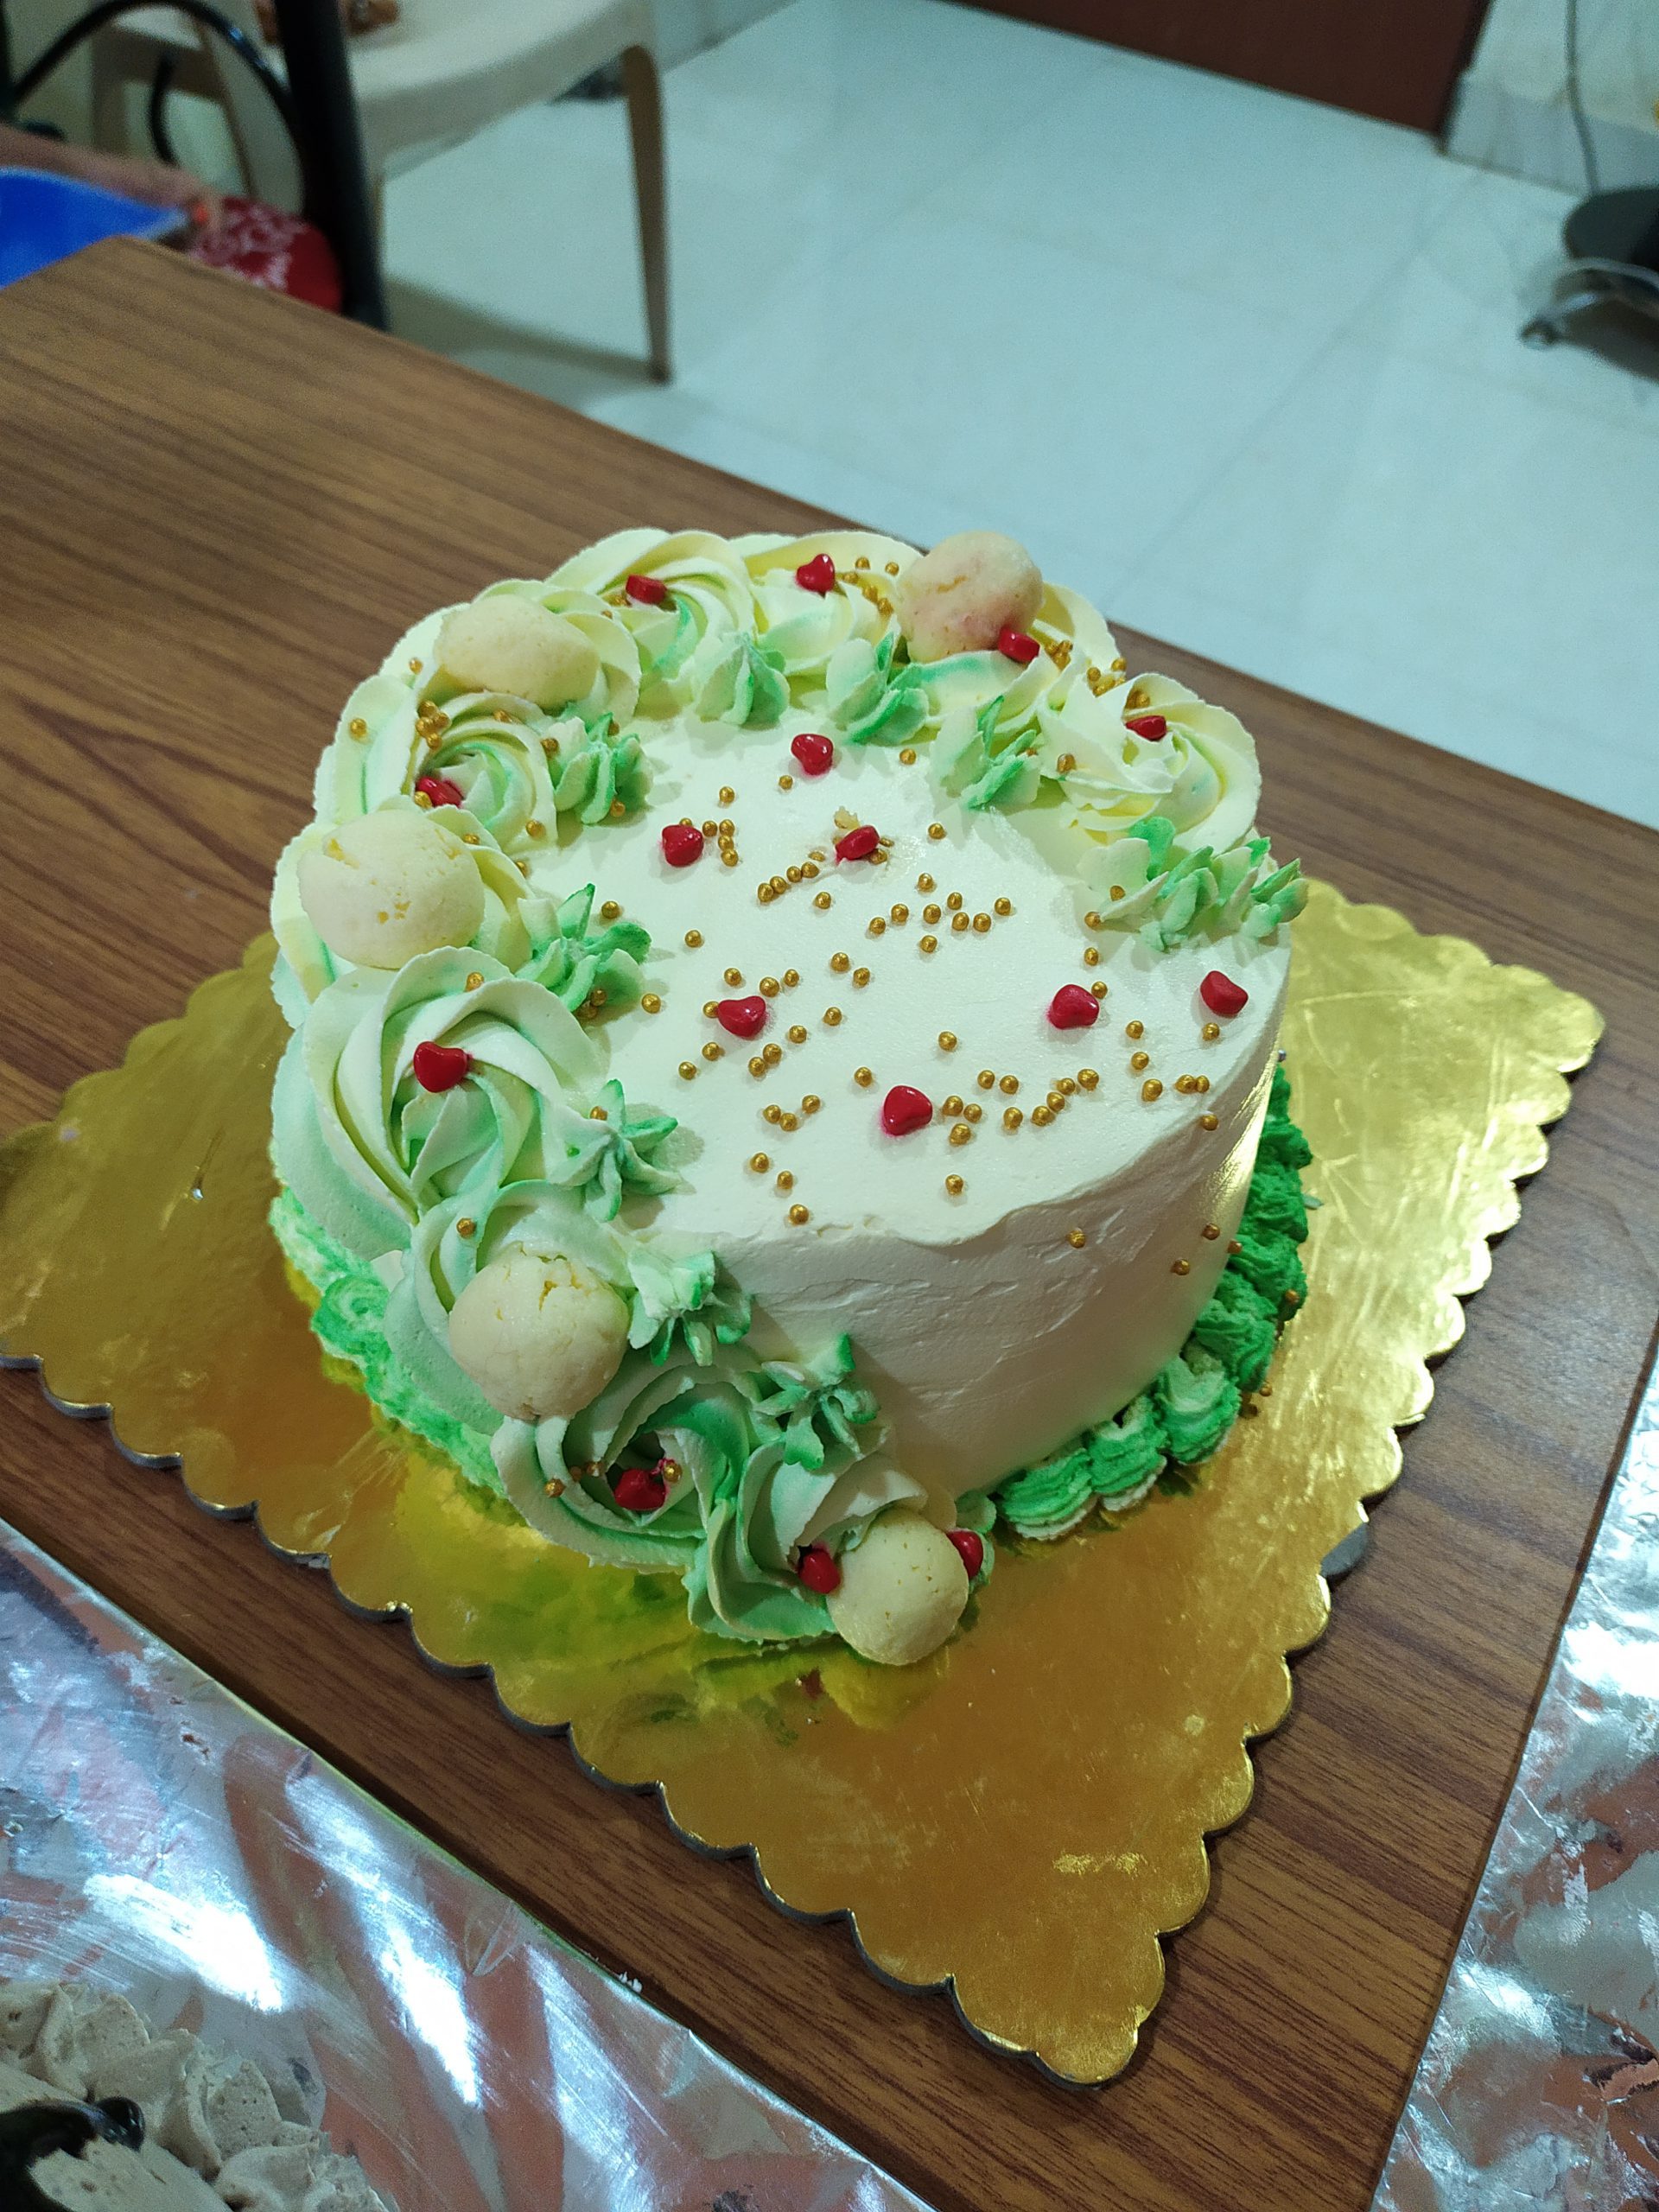 Rasmalai cake Designs, Images, Price Near Me